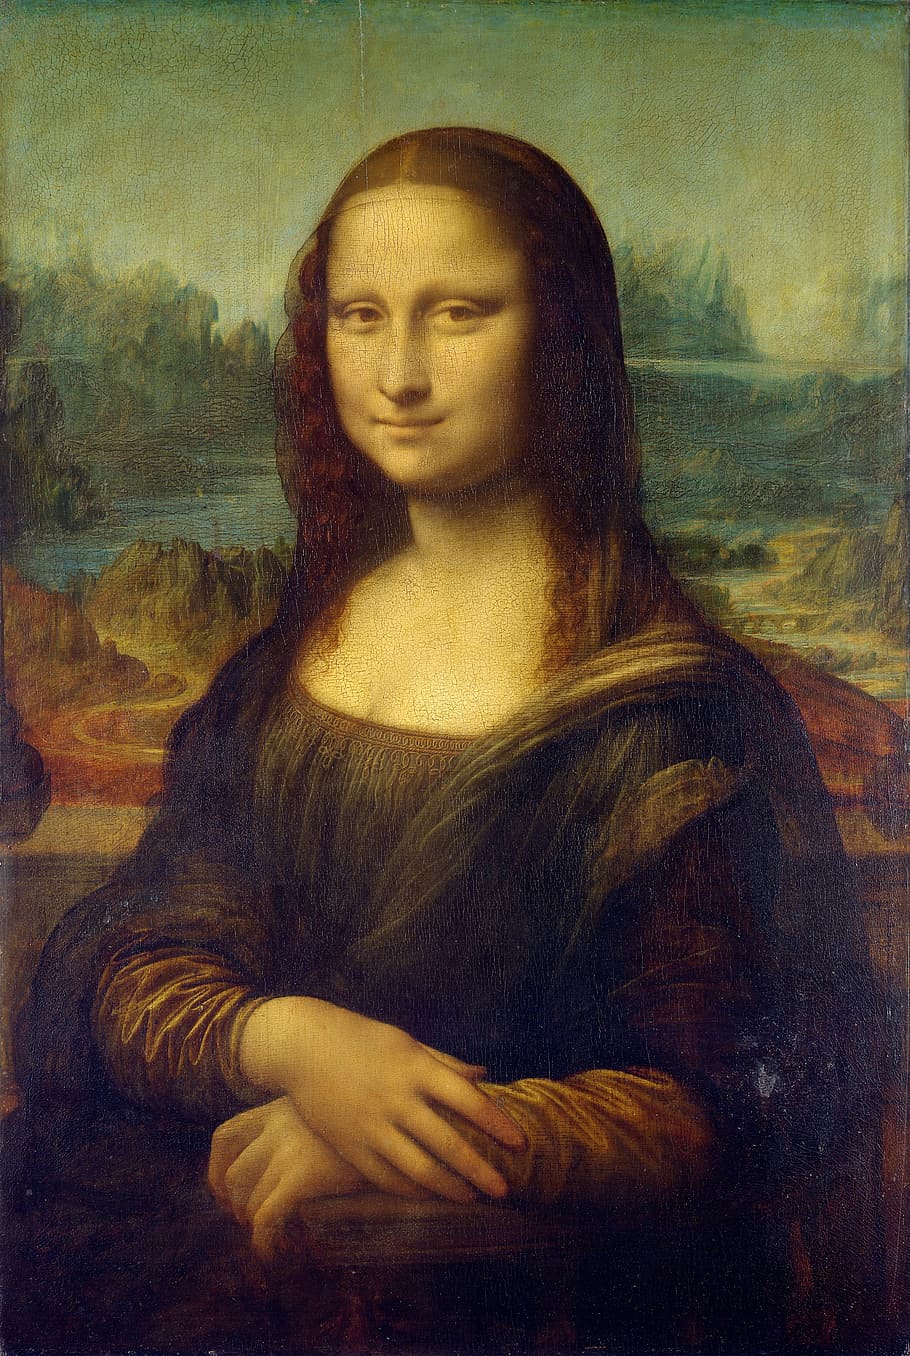 Mona Lisa by Leonardo Da Vinci painting, la gioconda, oil painting